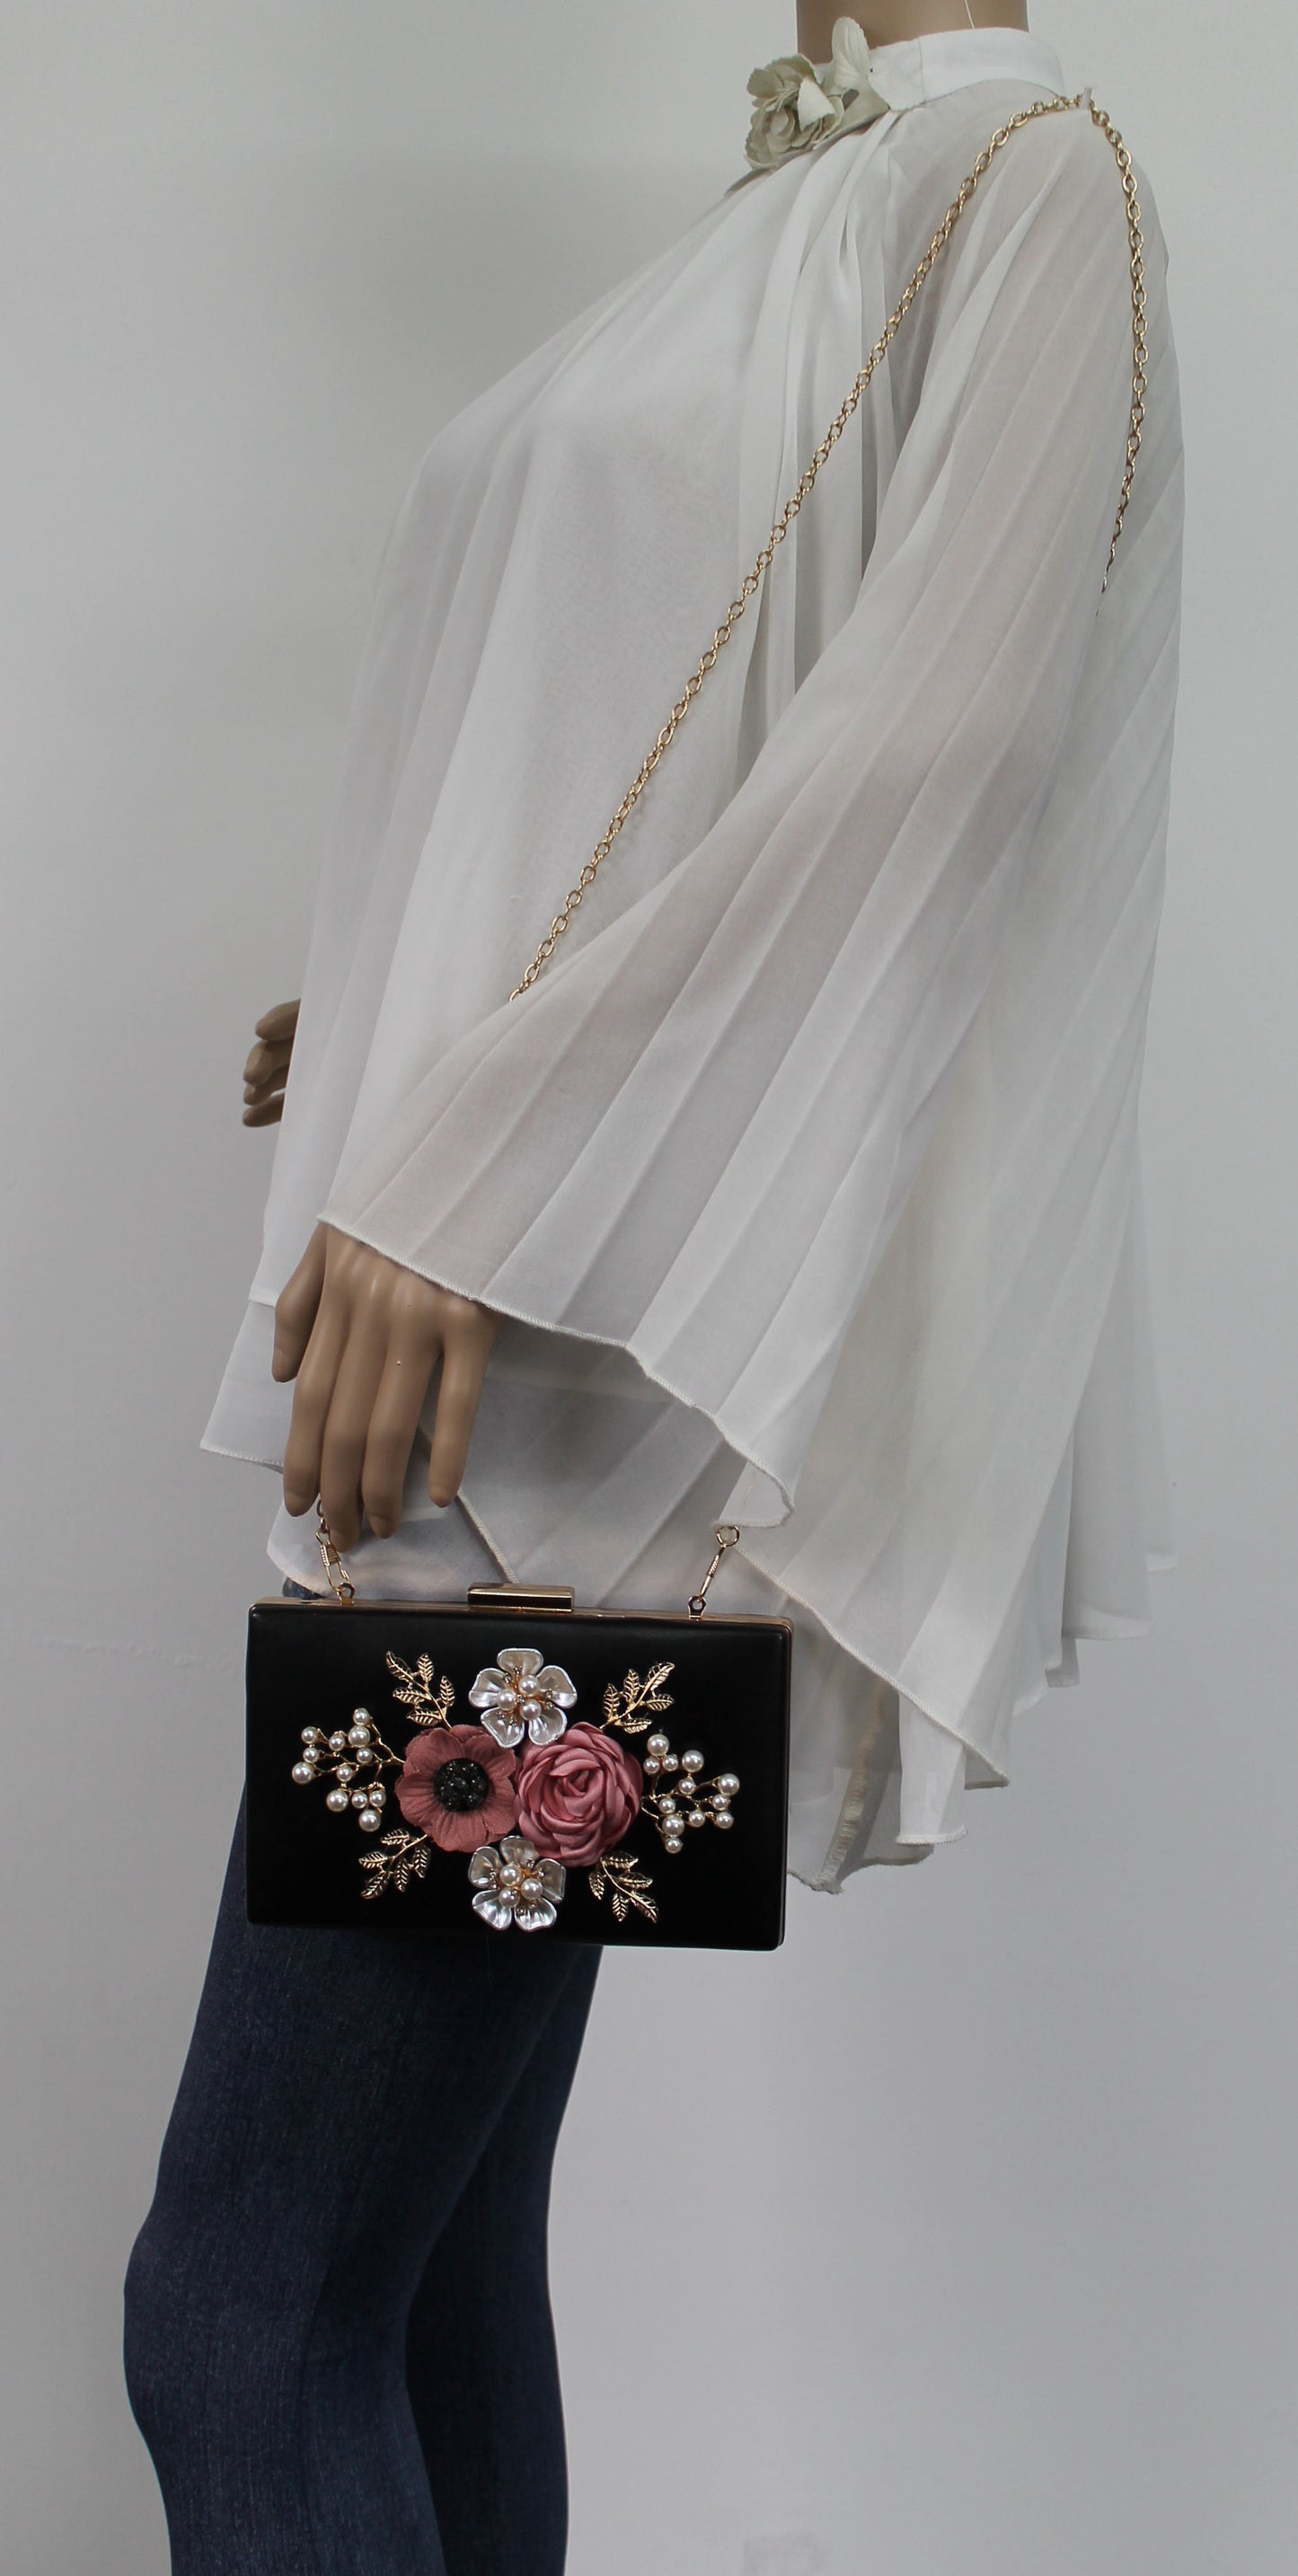 SWANKYSWANS Valery Floral Detail Clutch Bag Black Cute Cheap Clutch Bag For Weddings School and Work